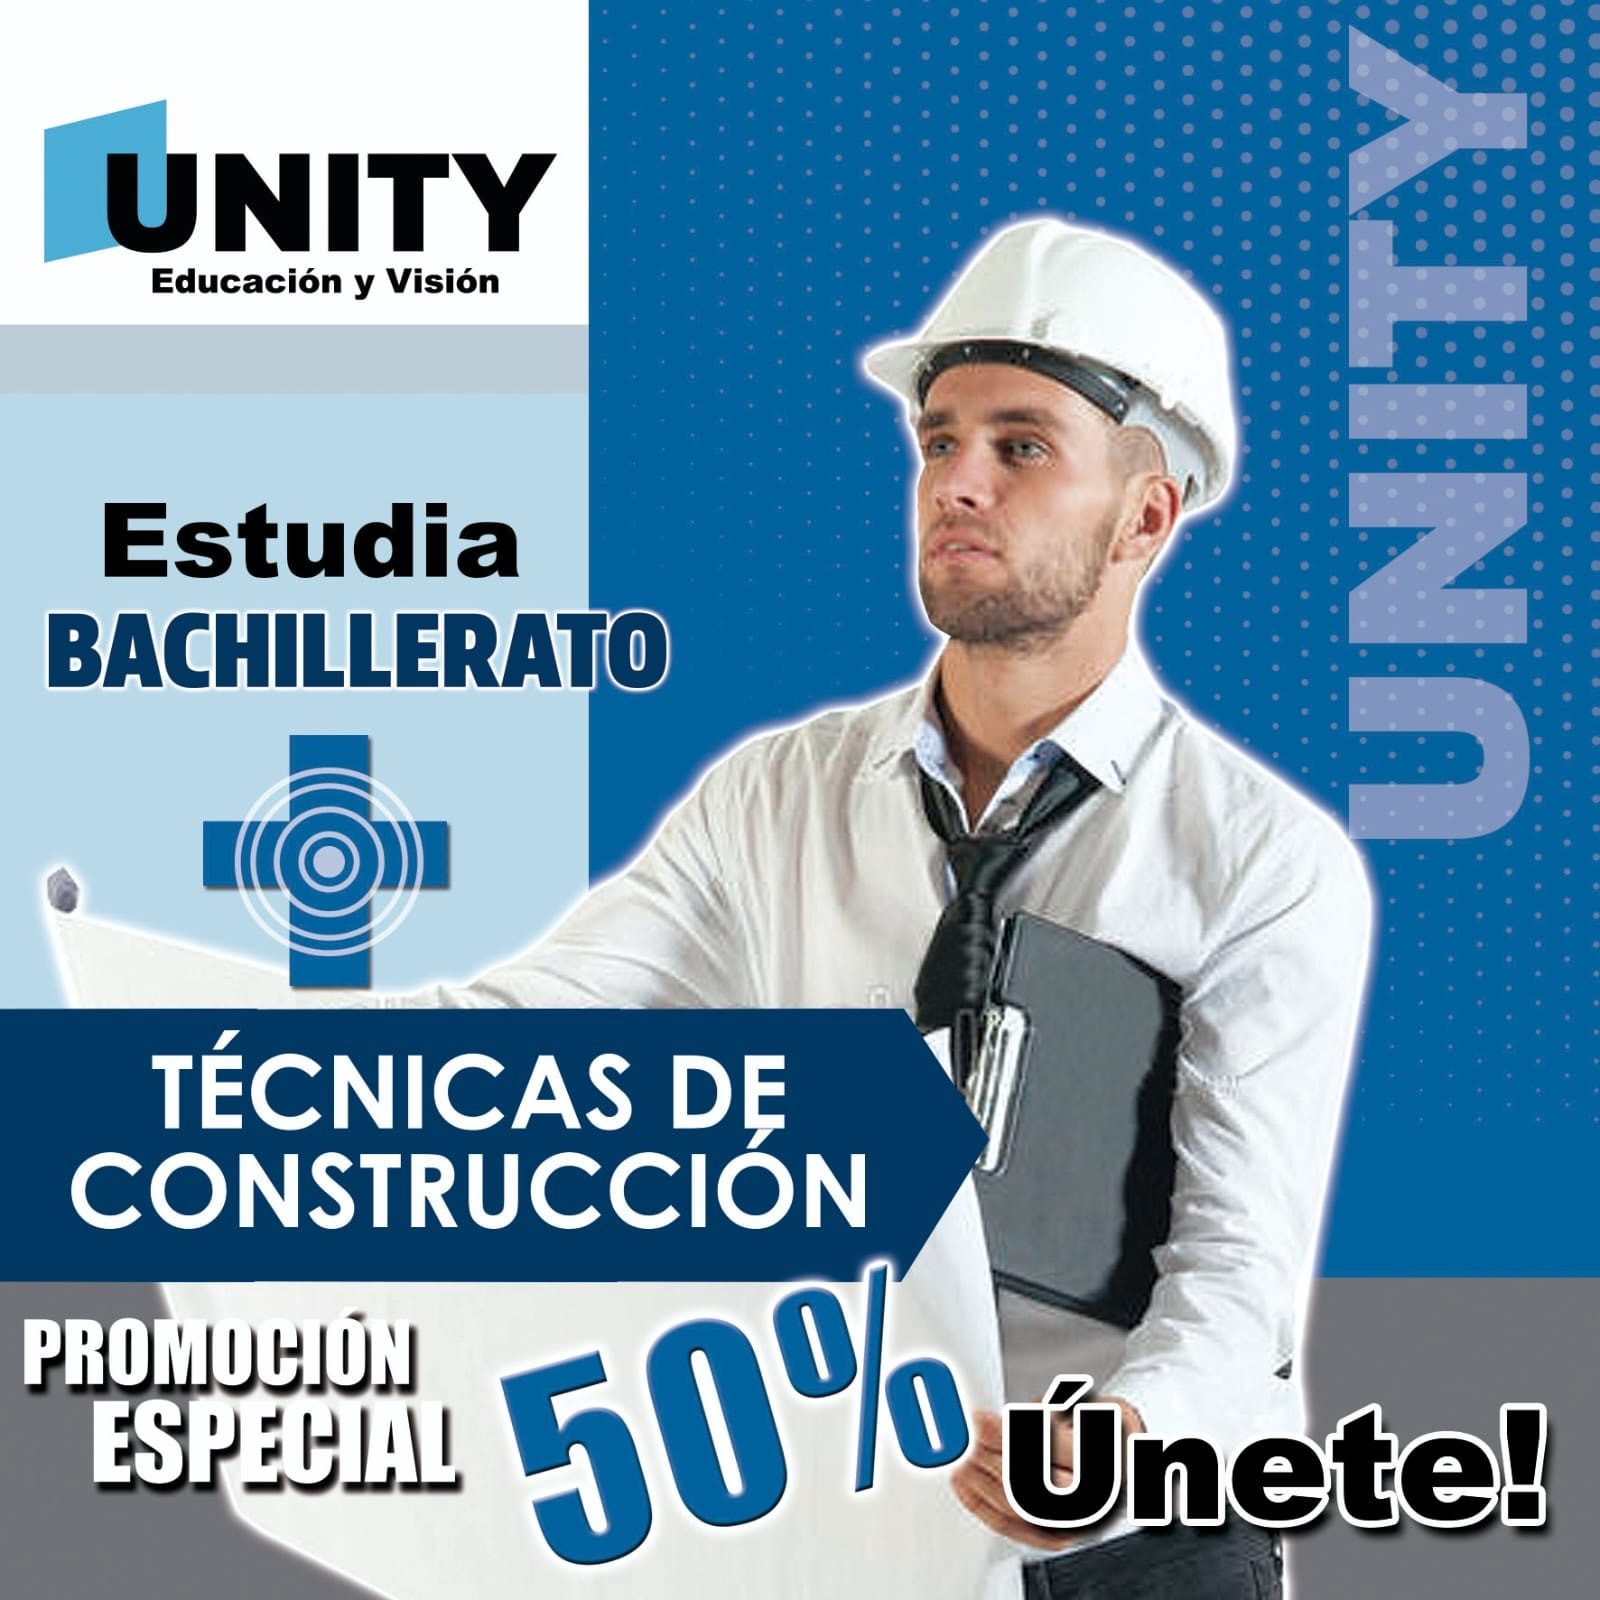 Universidad Unity